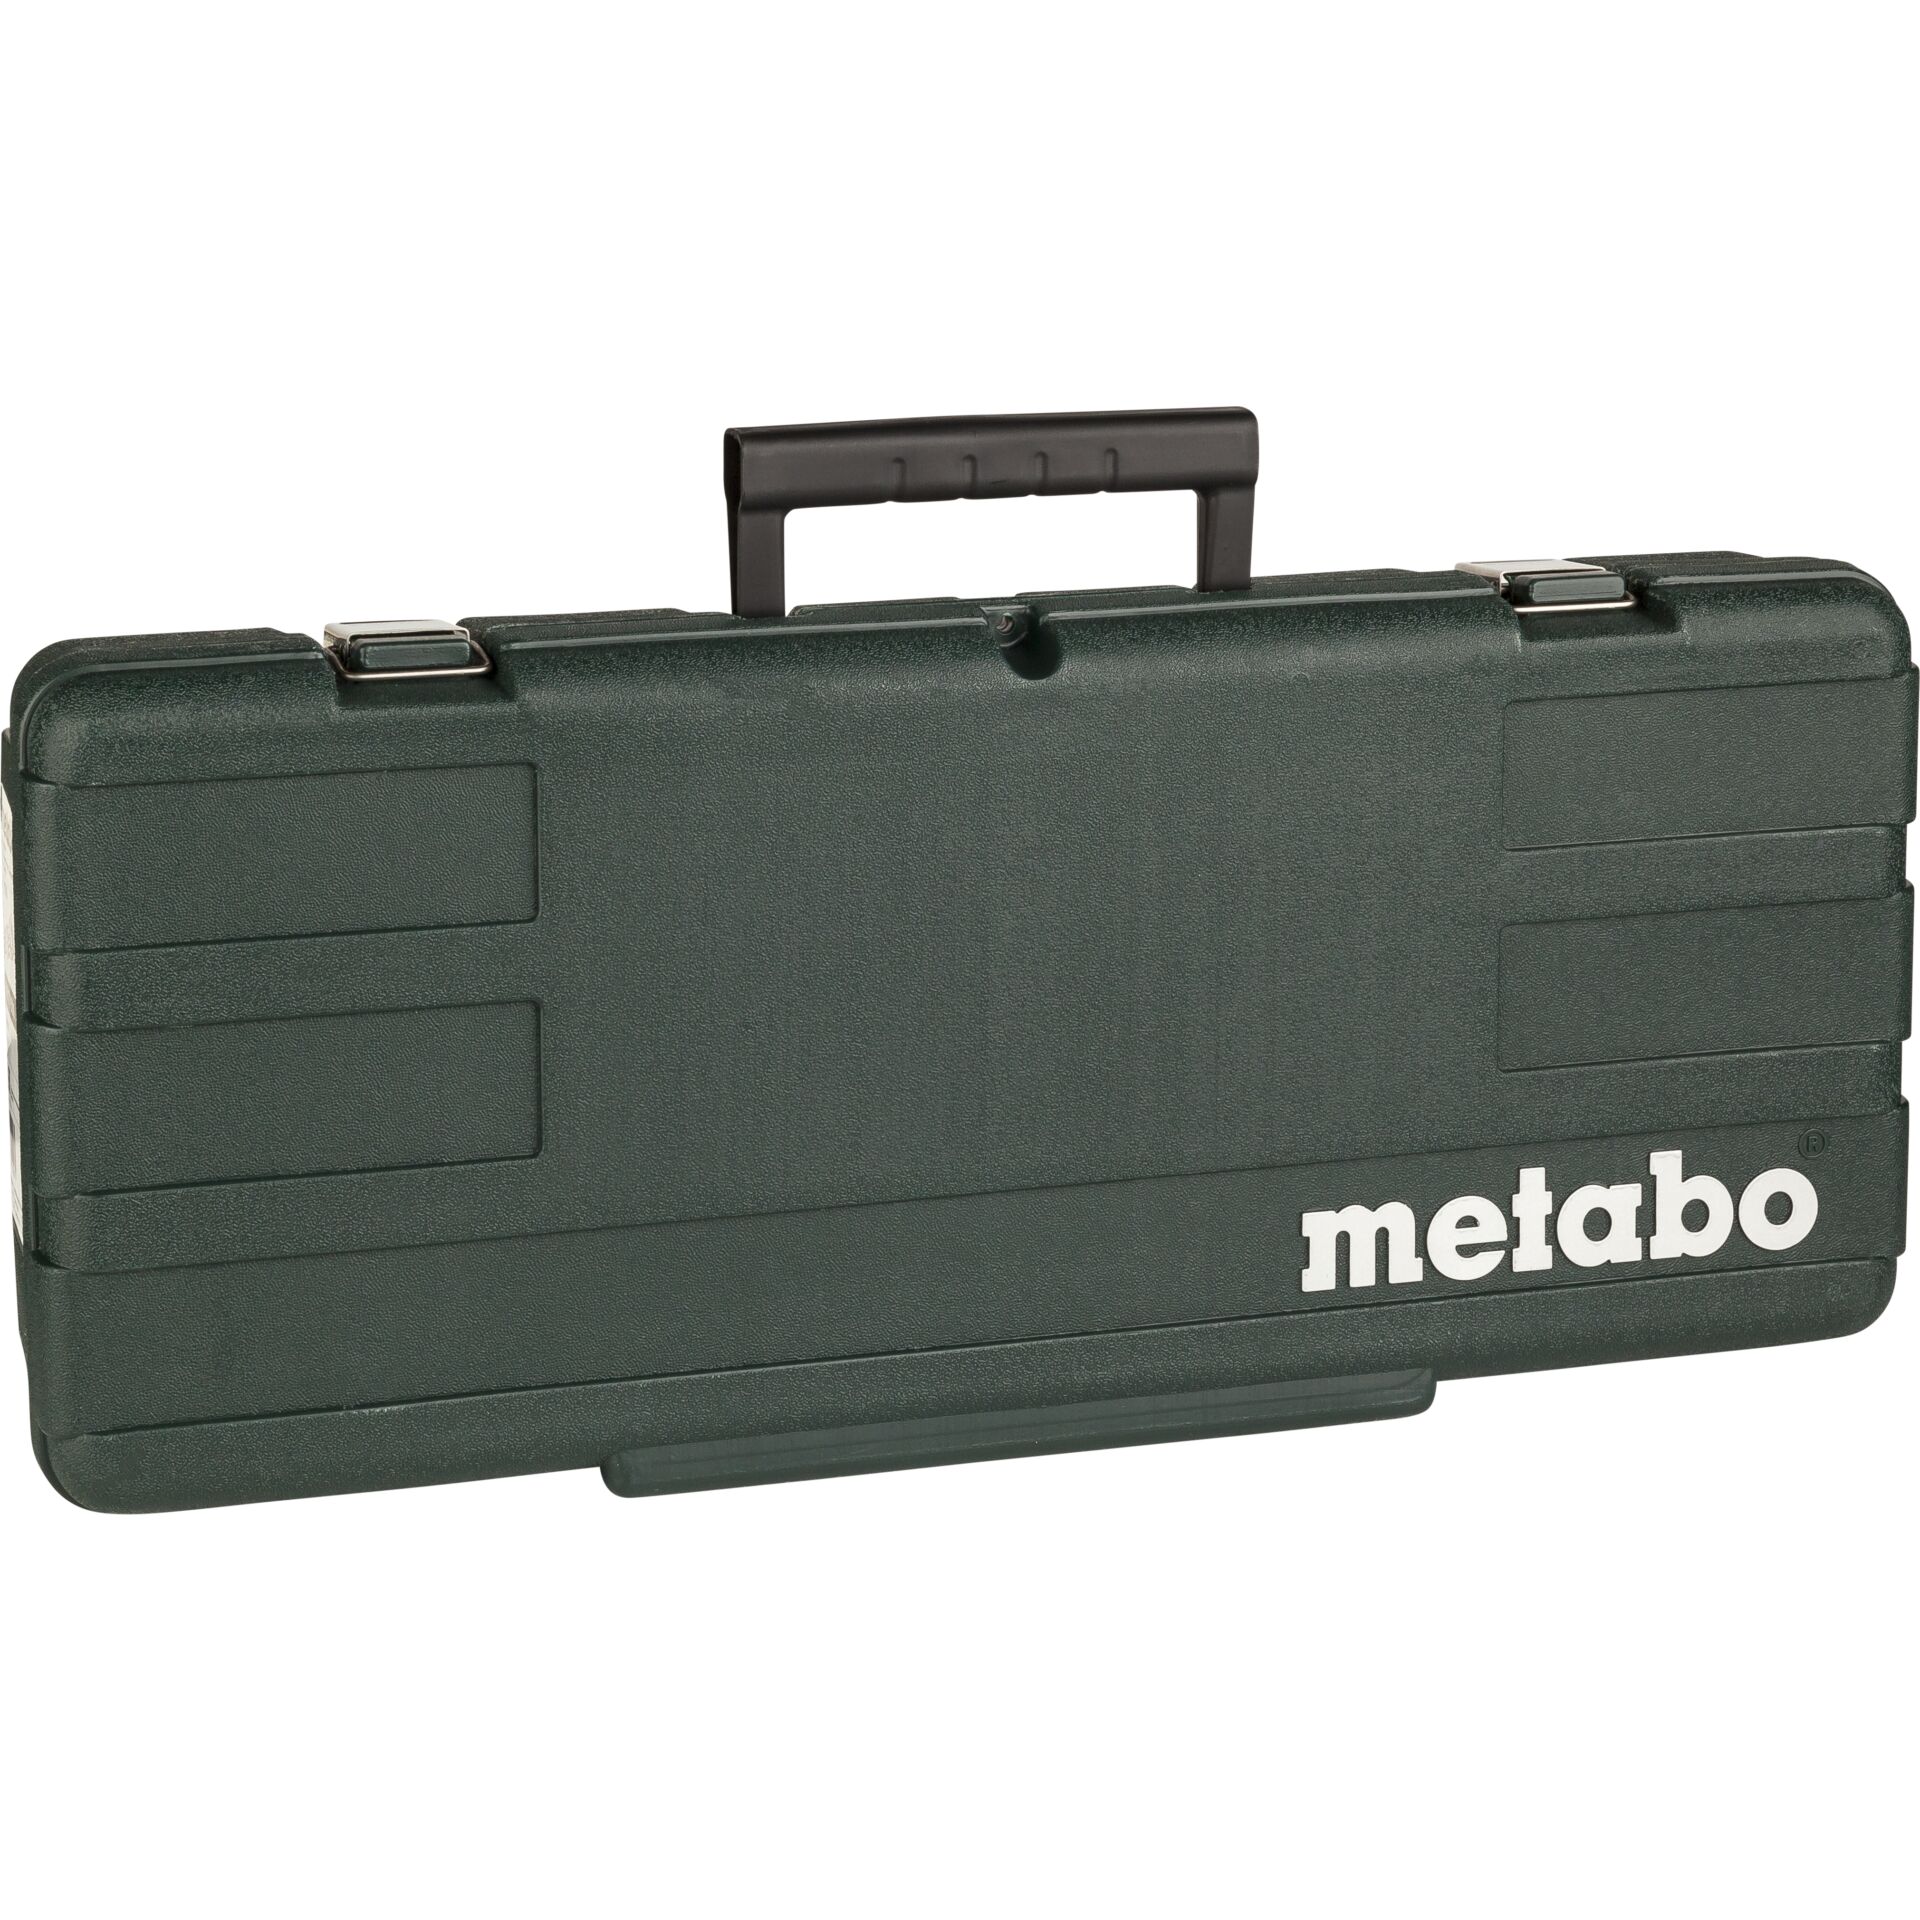 mm W 1100 Metabo -Metabo -SSE Hub-Länge 1100 Hardware/Electronic (606177500) Säbelsäge 28